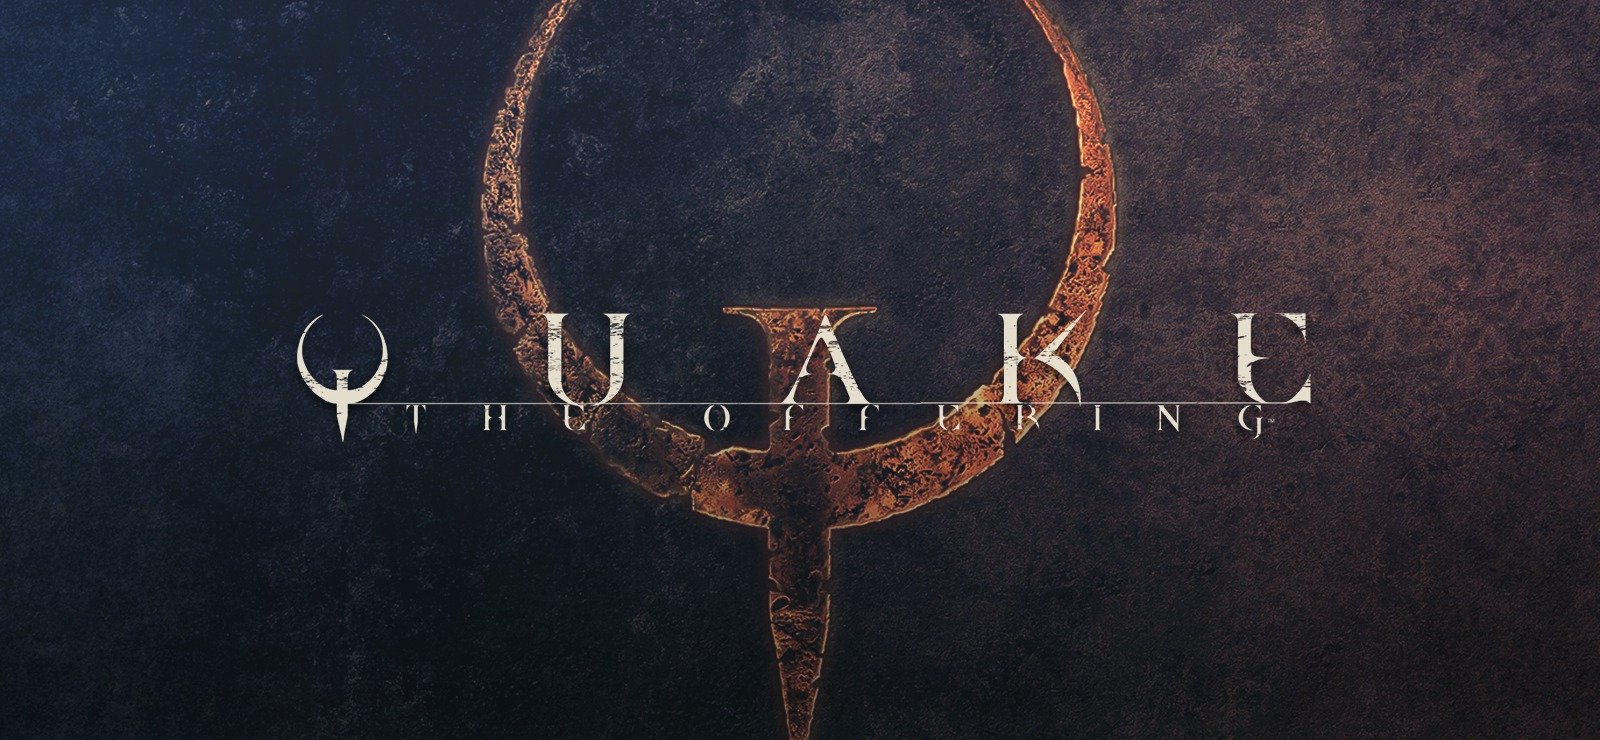 Quake wallpaper, Video Game, HQ Quake pictureK Wallpaper 2019